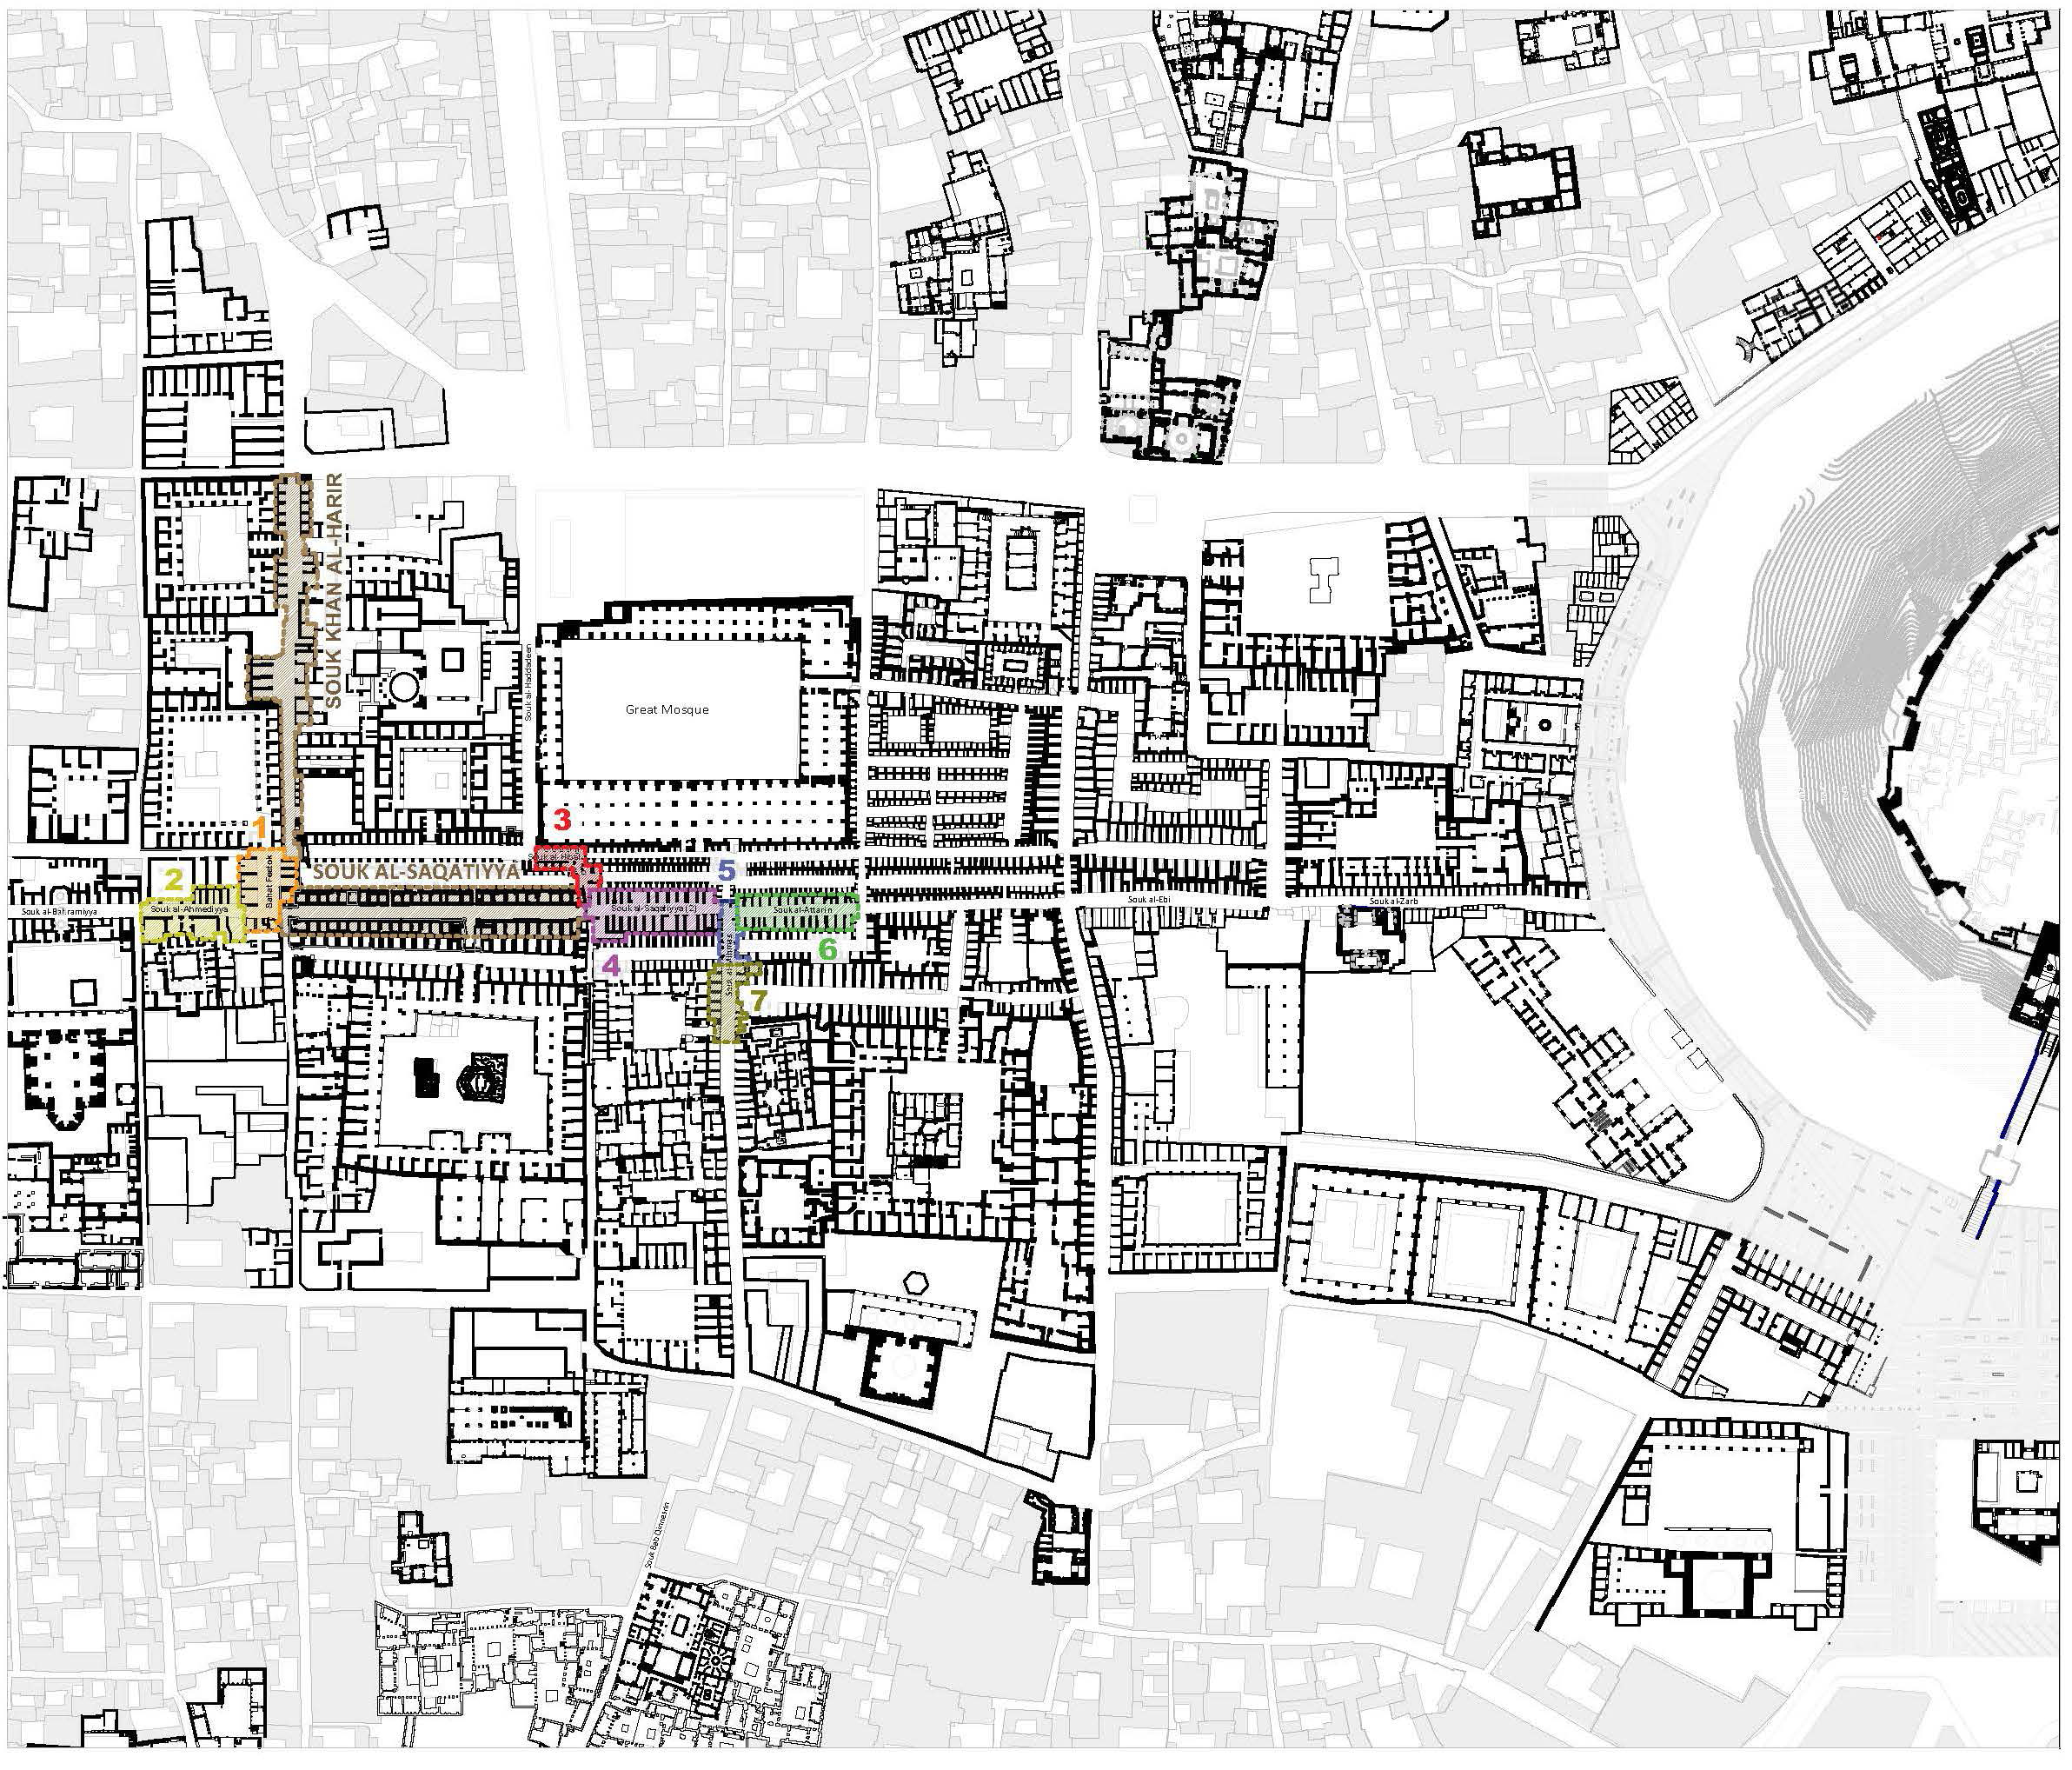 Souk al-Saqatiyya Rehabilitation - Plan of the Central Souk showing the Souk al-Saqatiyya in the Old City of Aleppo